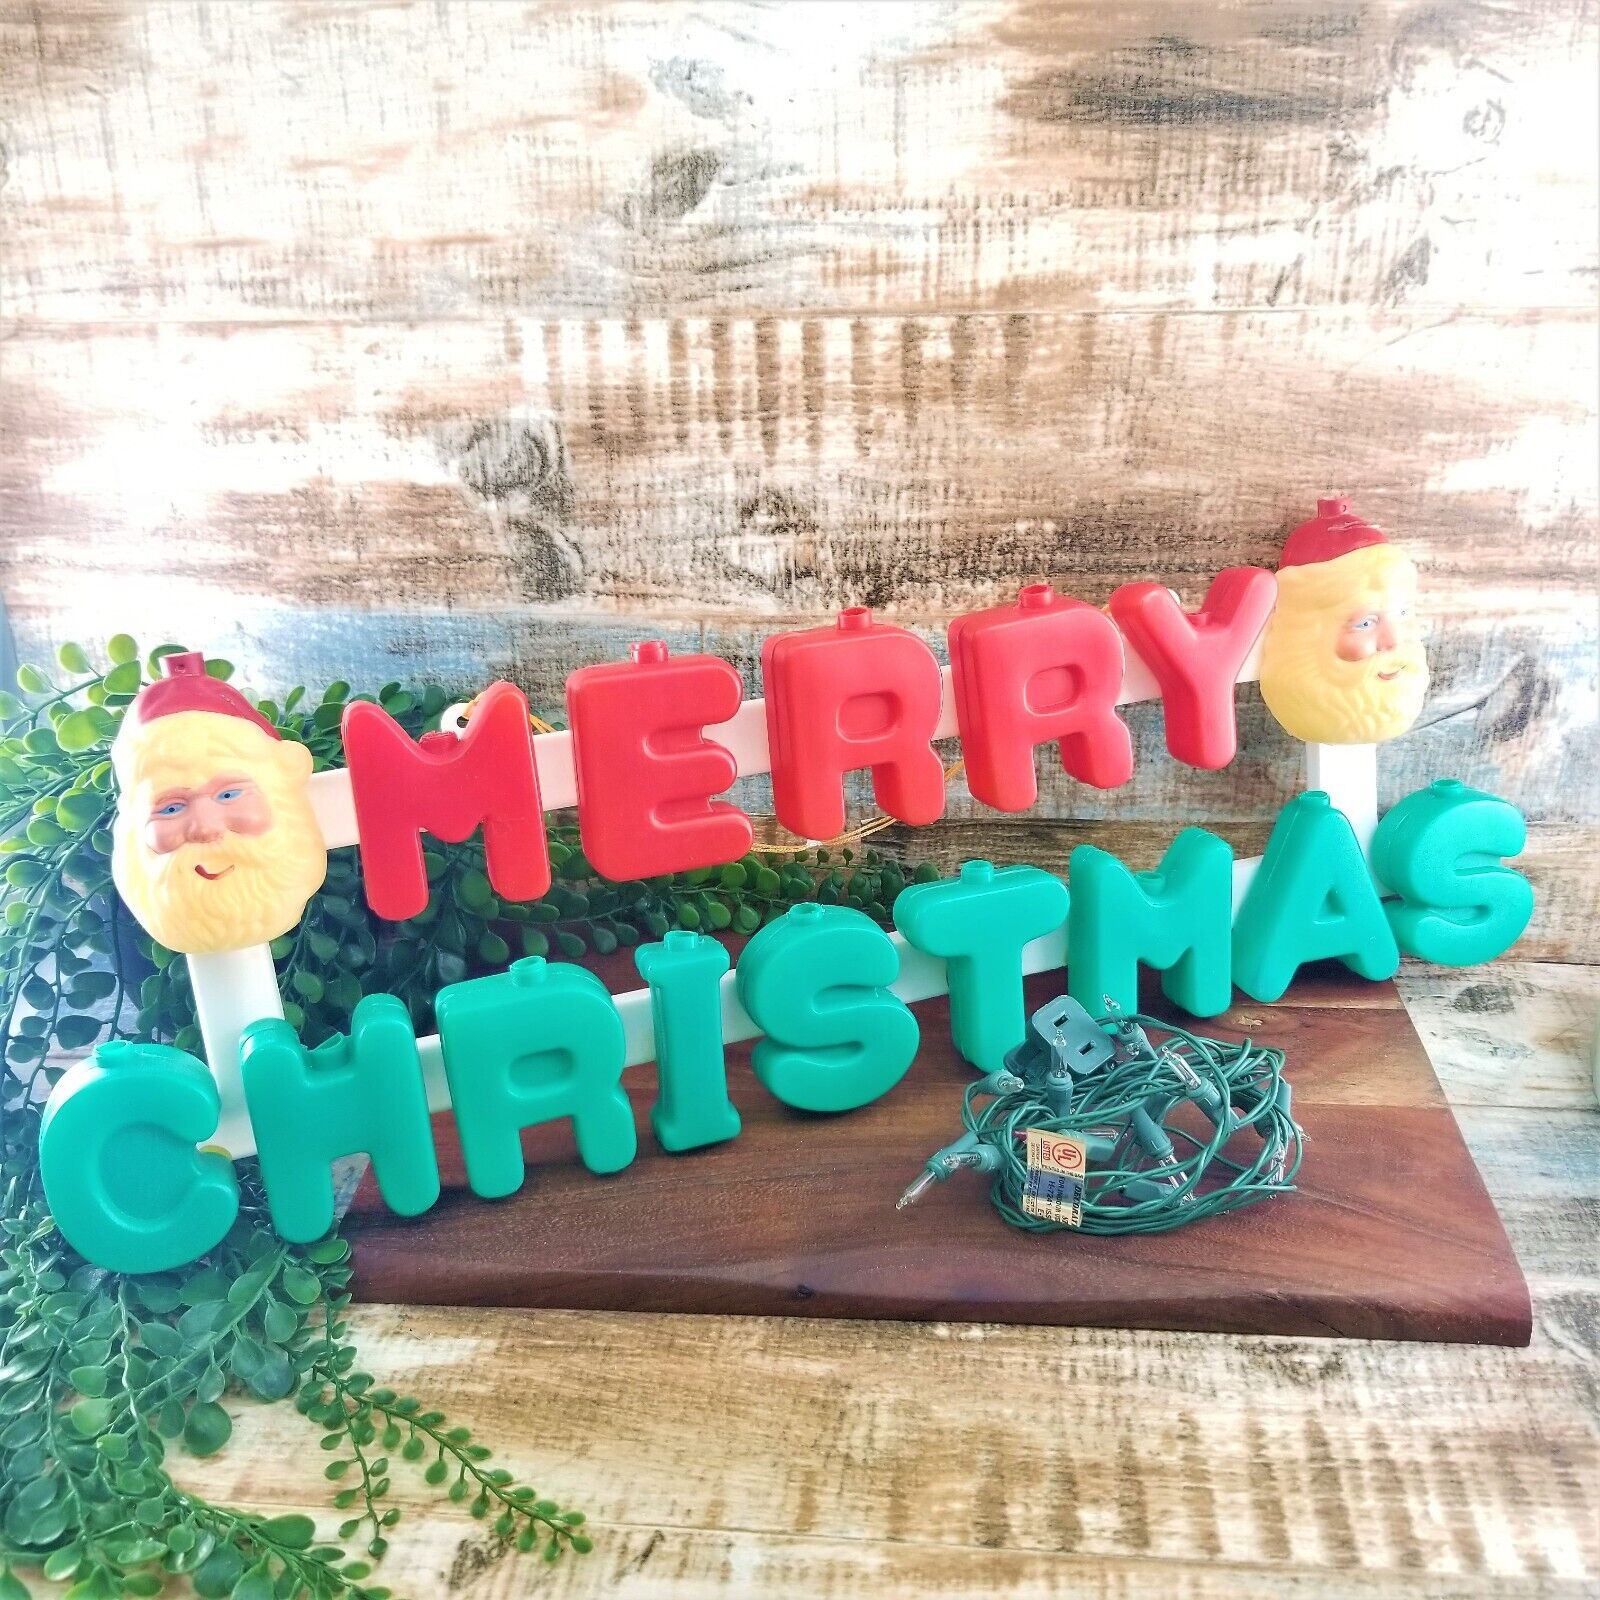 VTG Merry Christmas 16 String Light Up Sign Plastic Retro Santa Blow Mold READ